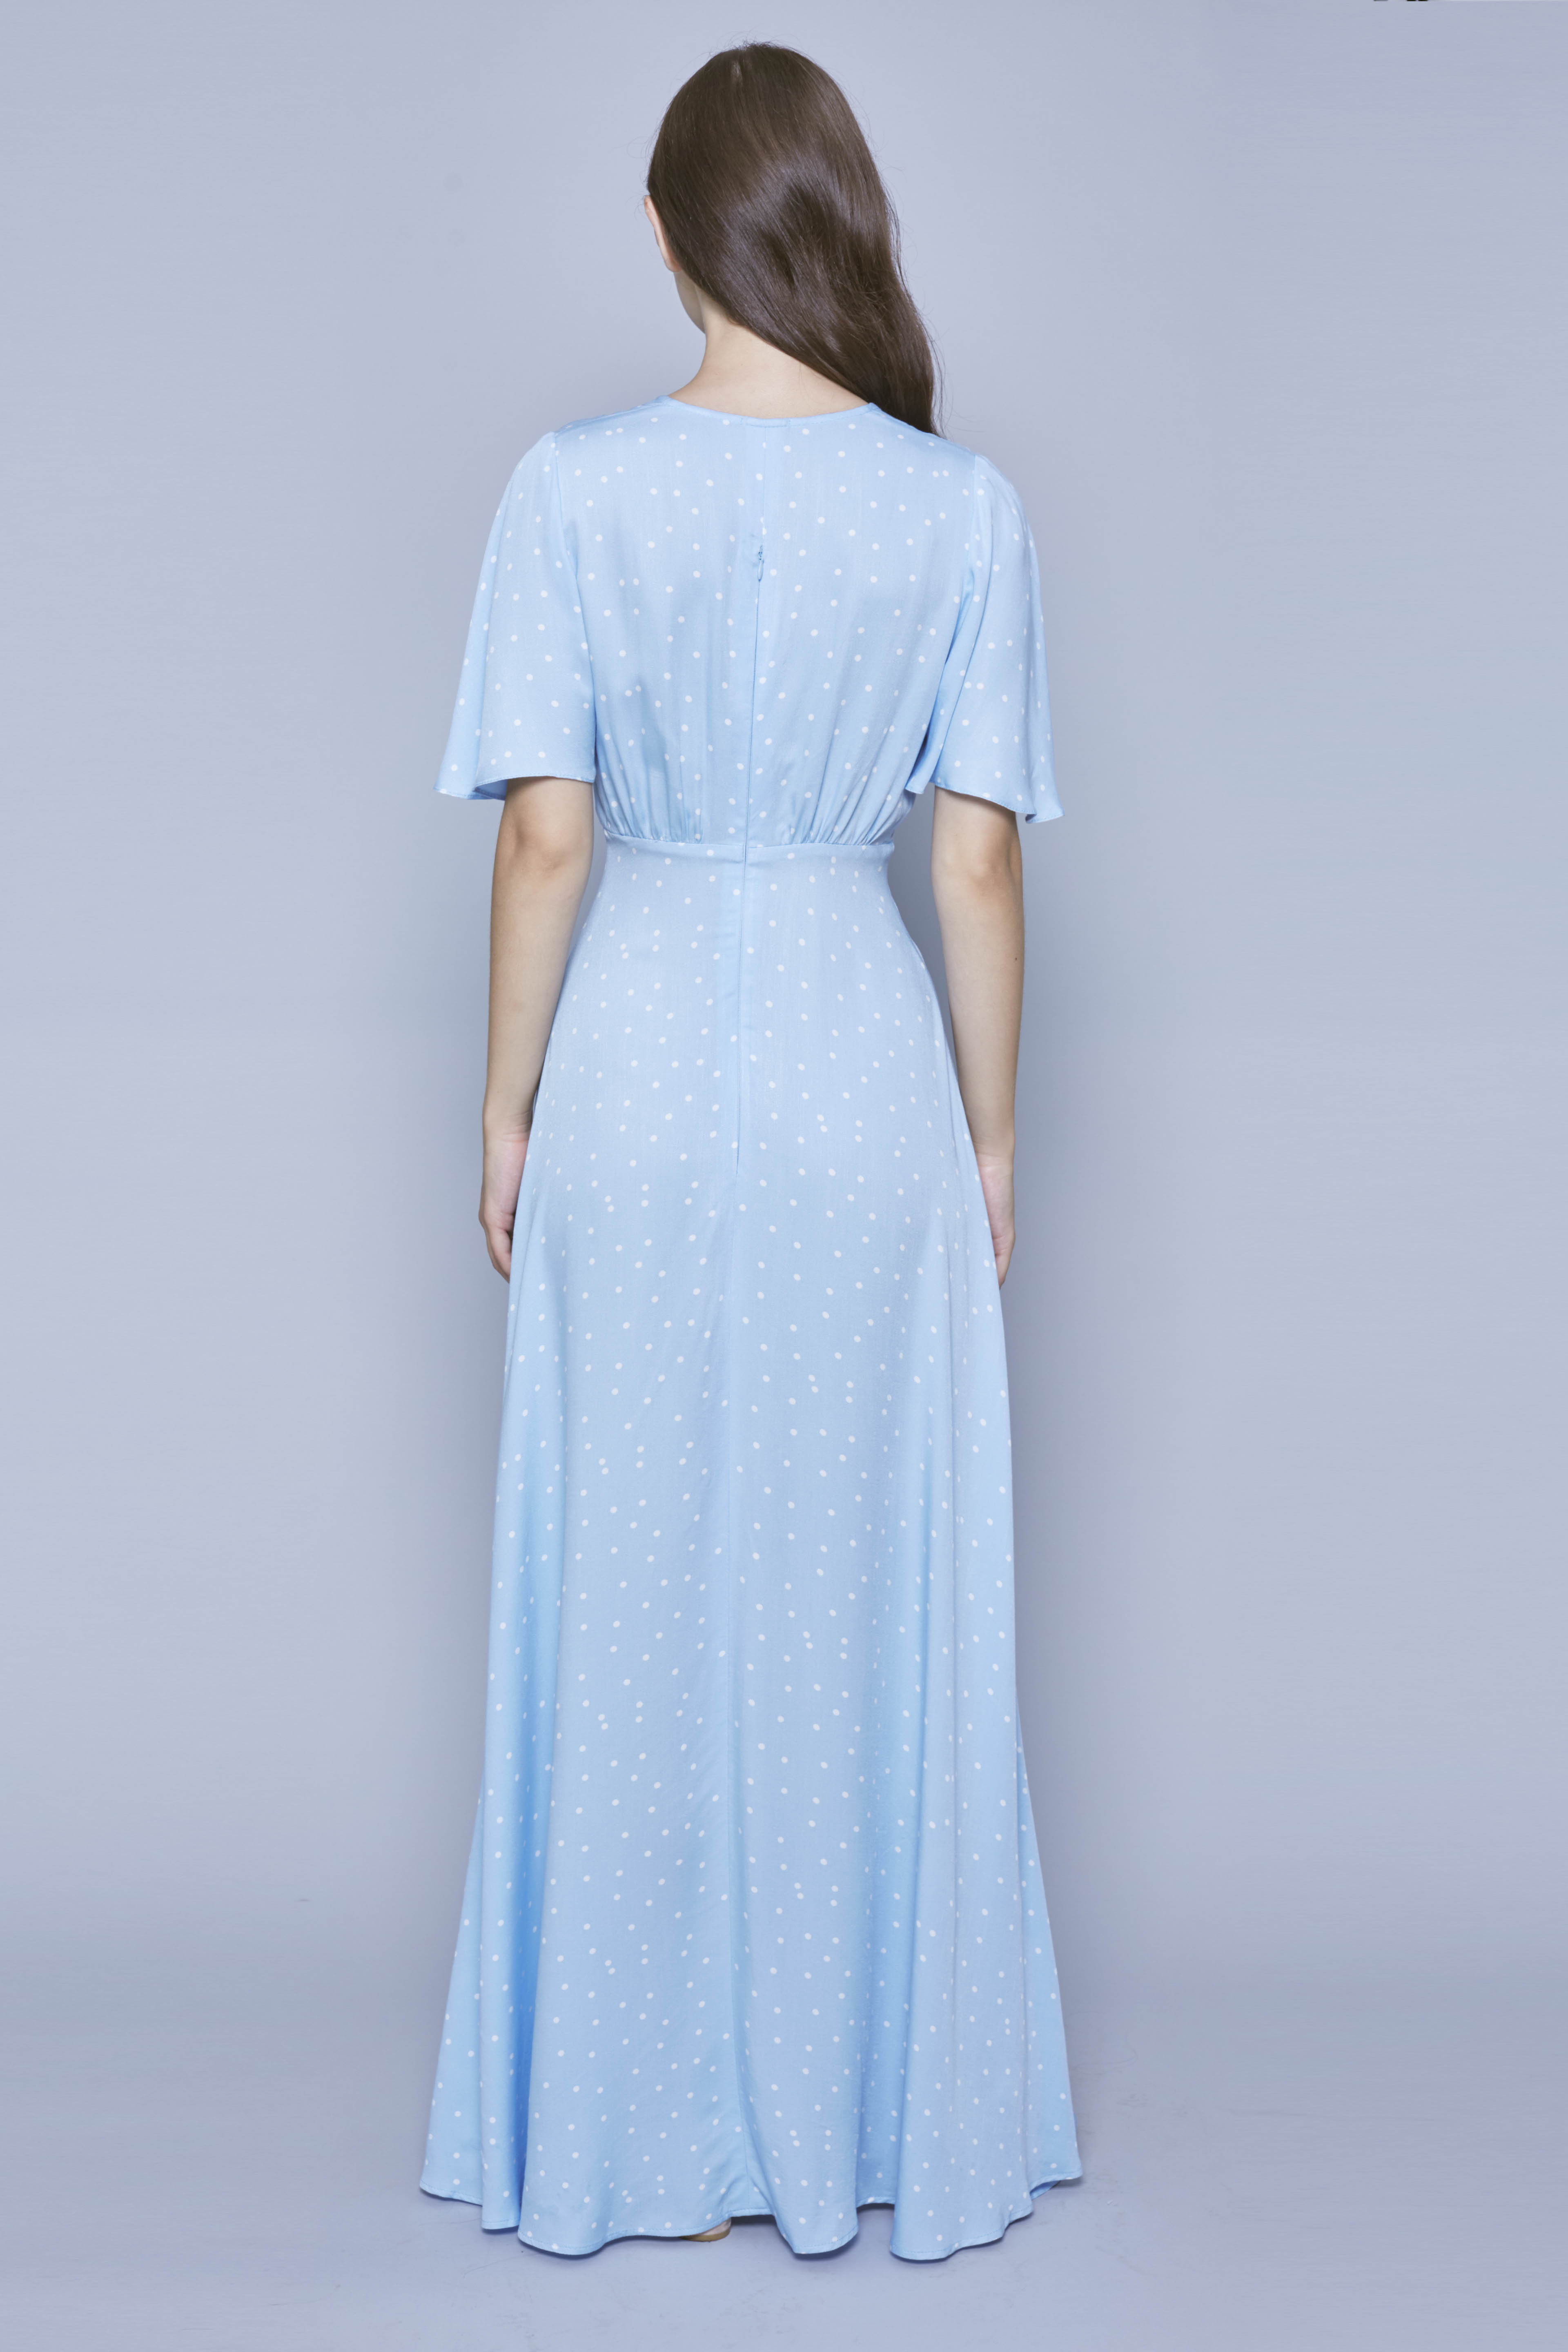 Blue polka dot maxi dress, photo 3